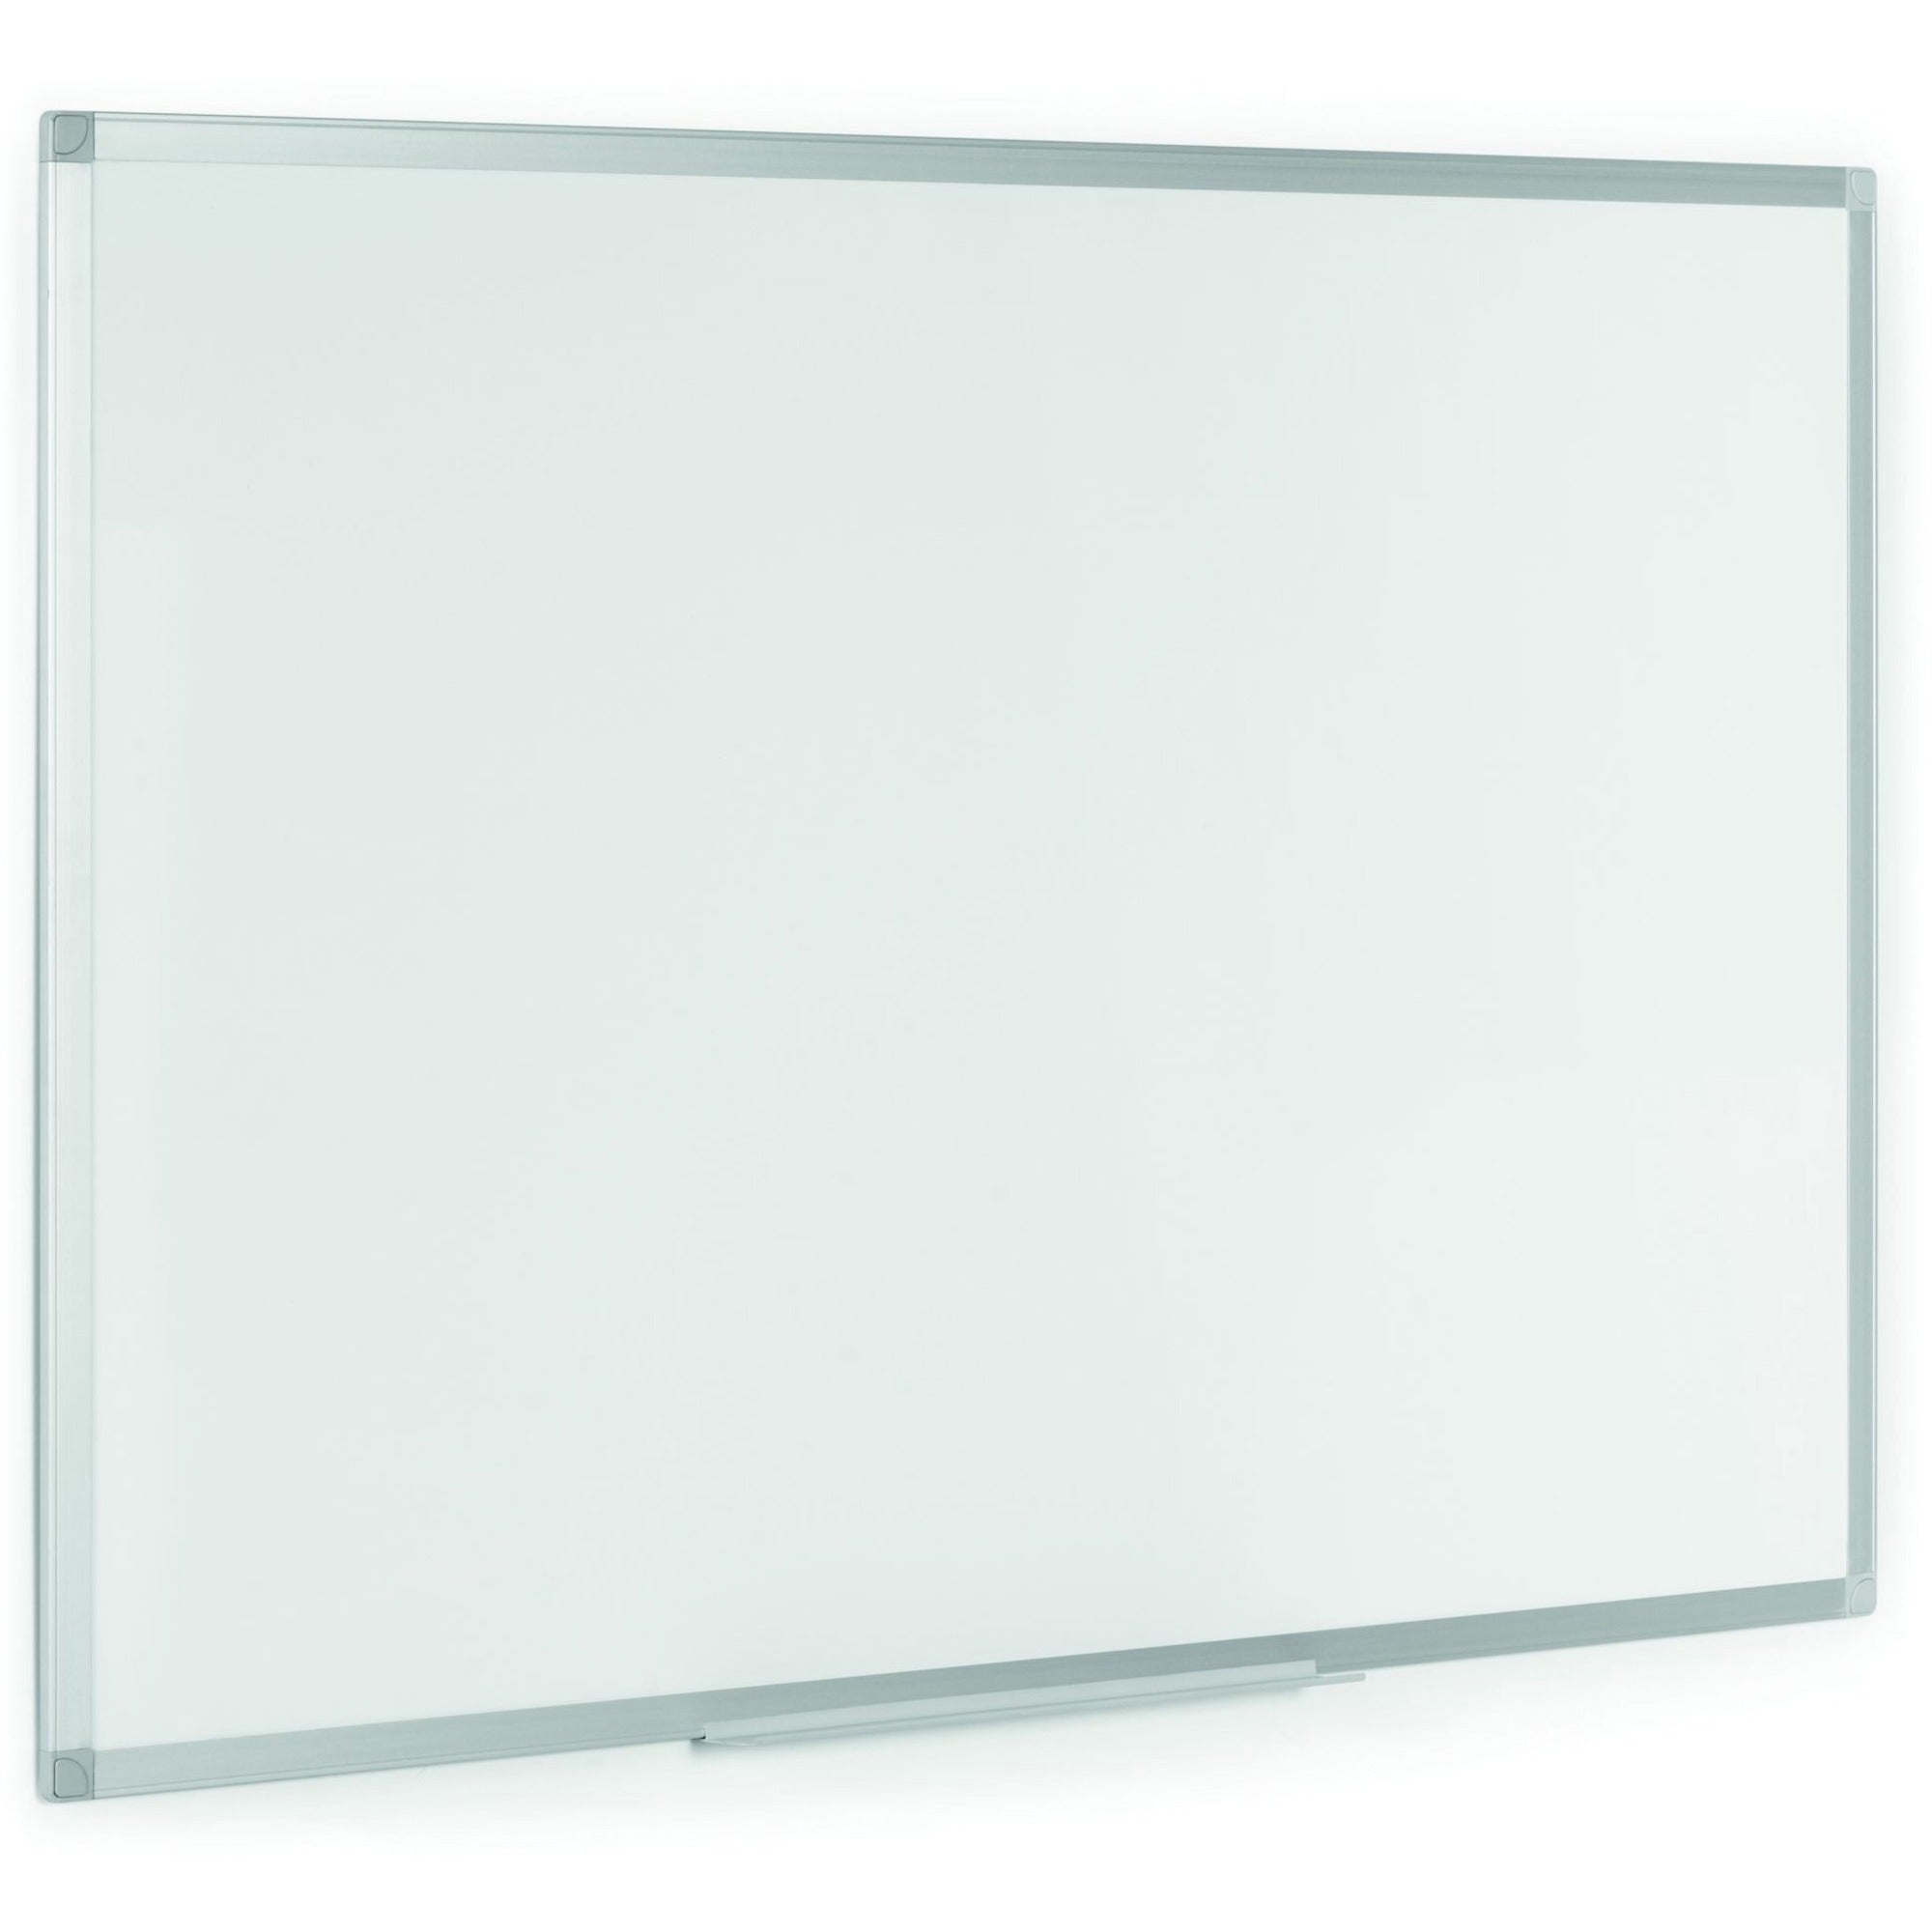 bi-silque-ayda-porcelain-dry-erase-board-36-3-ft-width-x-24-2-ft-height-white-porcelain-surface-aluminum-frame-rectangle-horizontal-vertical-magnetic-1-each_bvccr06999214 - 4